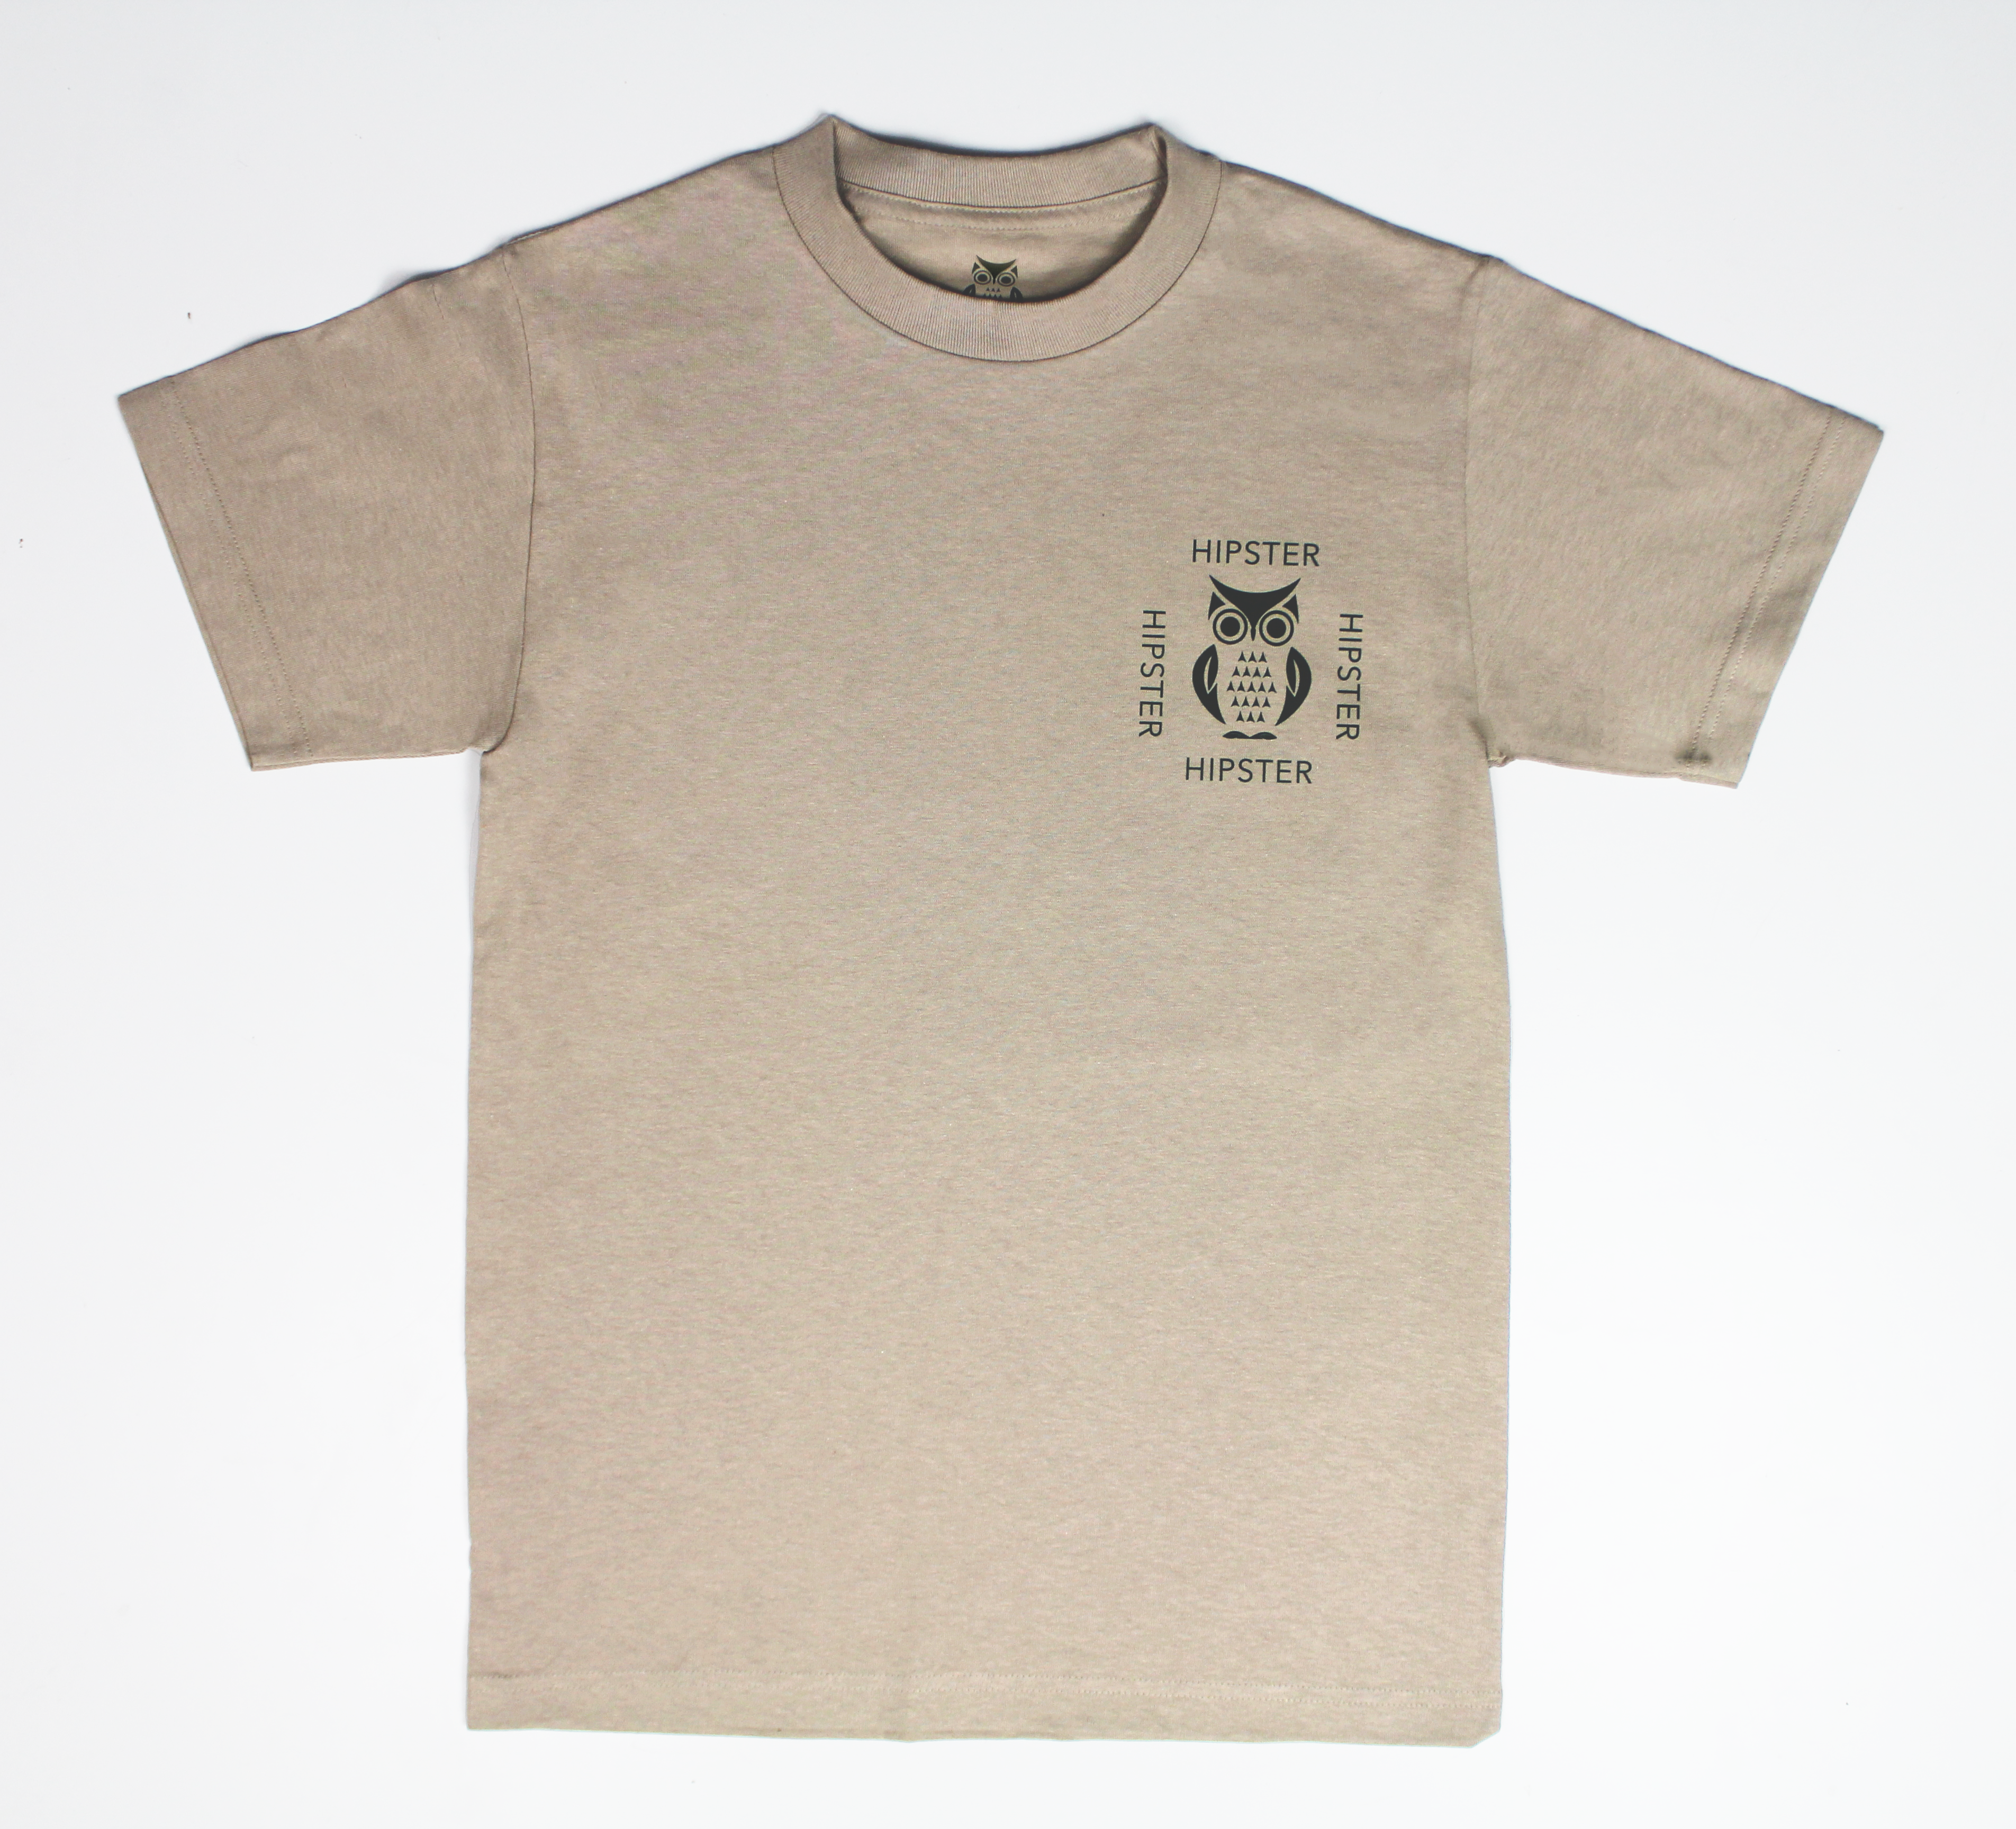 Wall To Wall Hipster Small Print T-Shirt - Tan